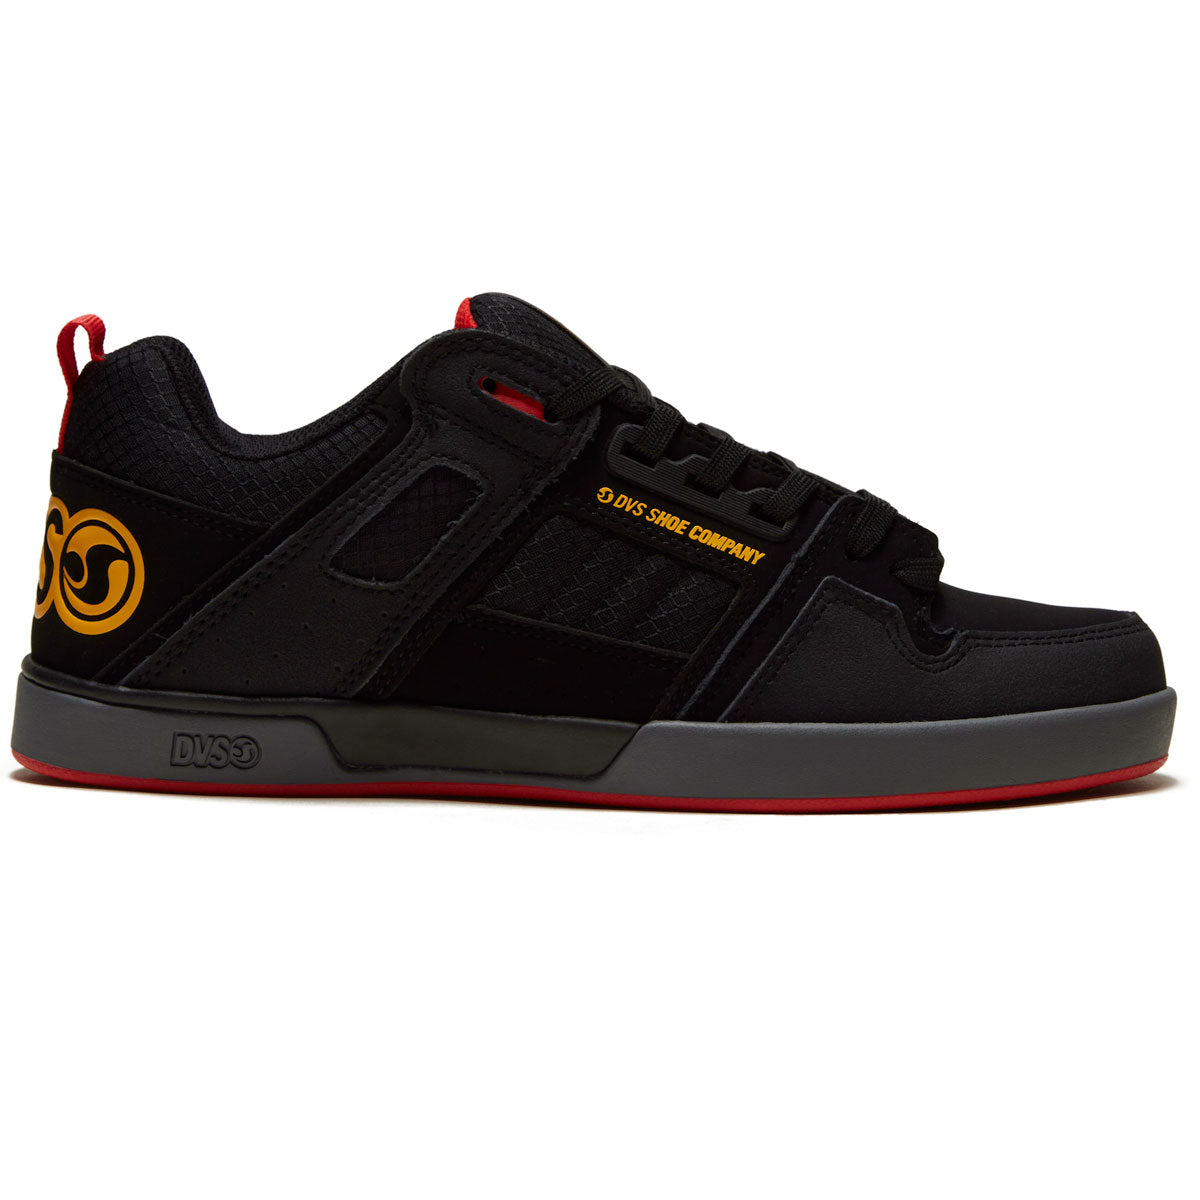 DVS Comanche 2.0+ Shoes - Black/Yellow/Red Nubuck image 1